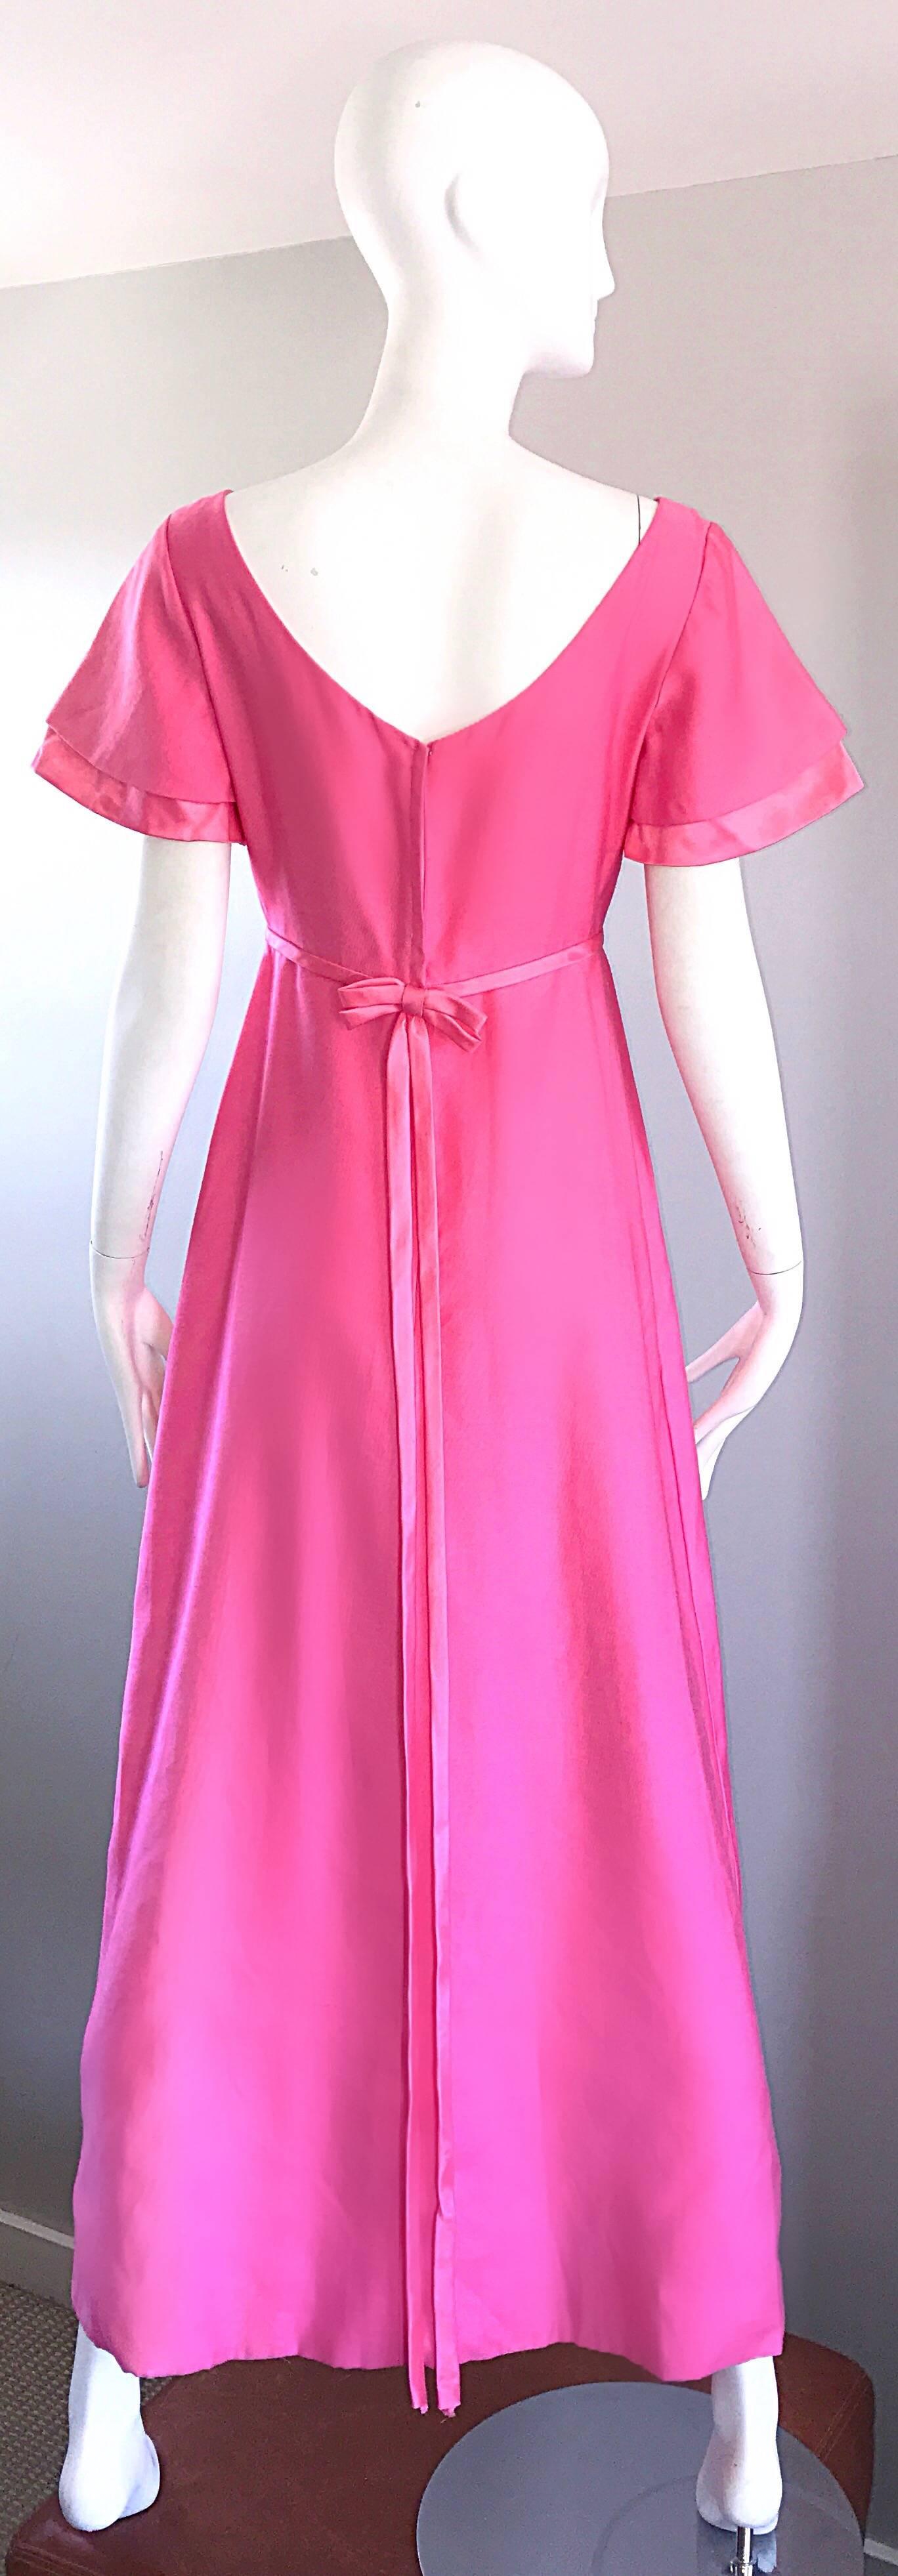 70s pink dress